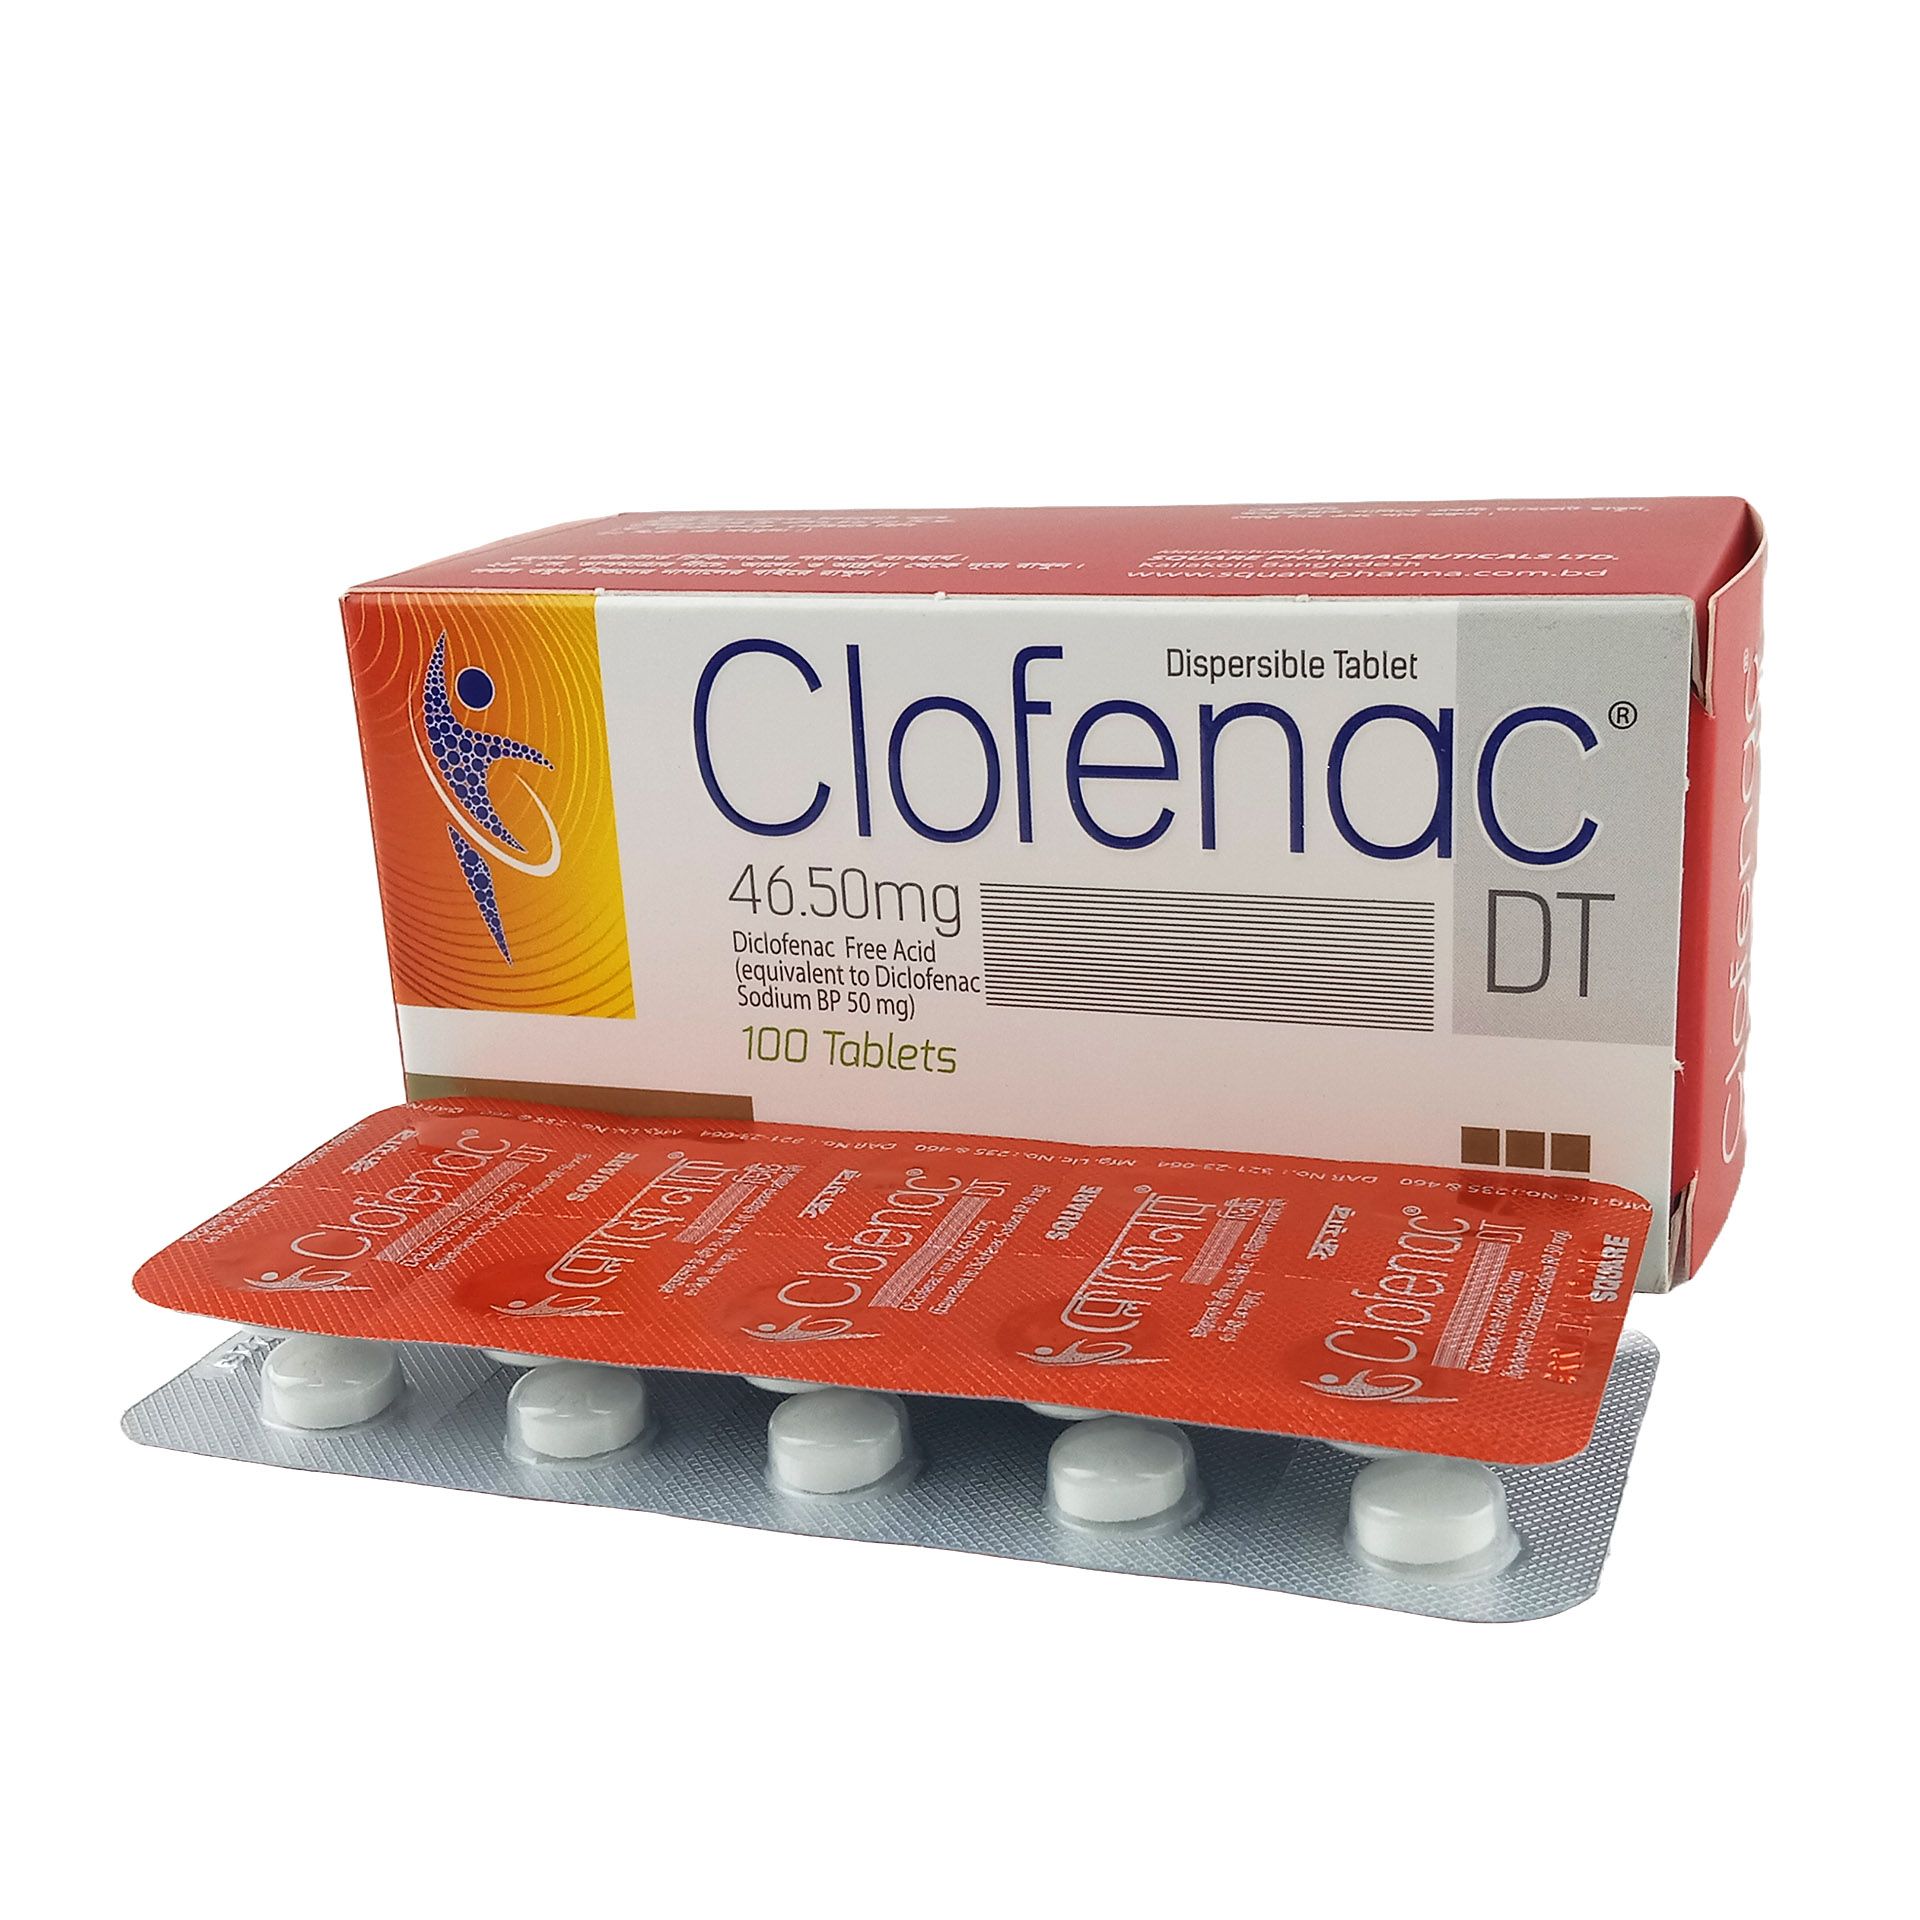 Clofenac DT 46.50mg Tablet